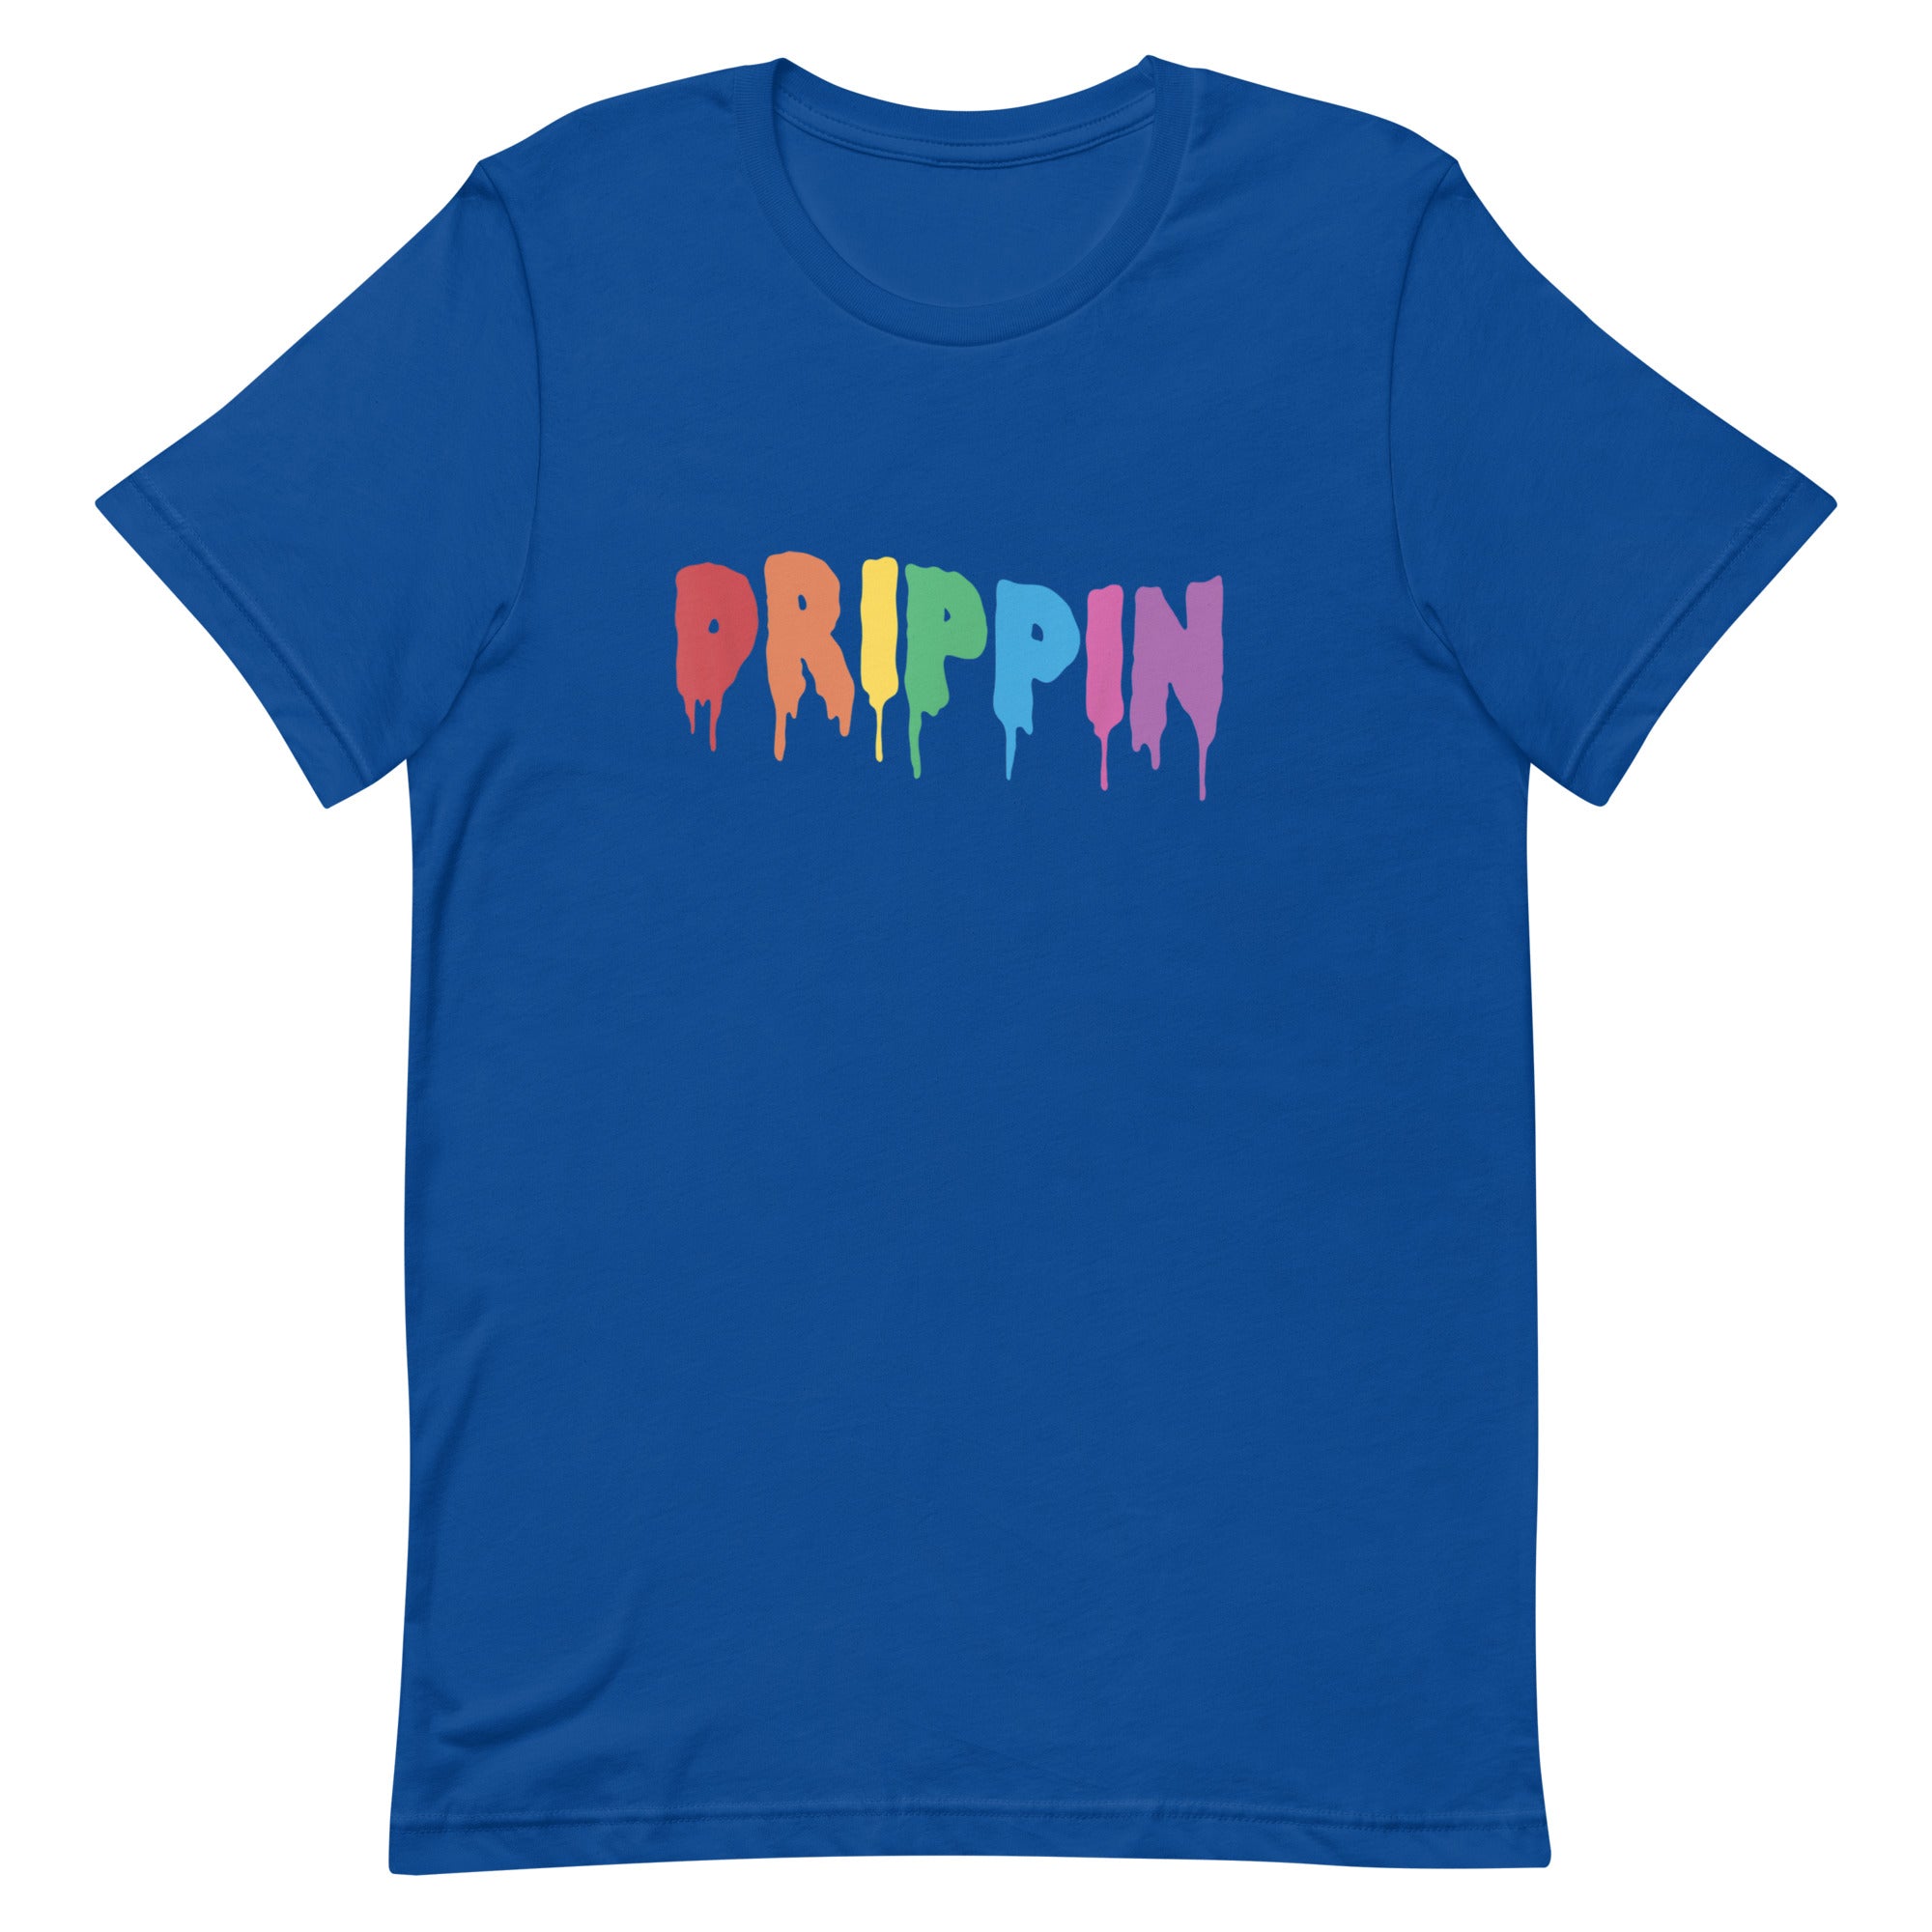 DRIPPIN Unisex t-shirt - Hiphopya